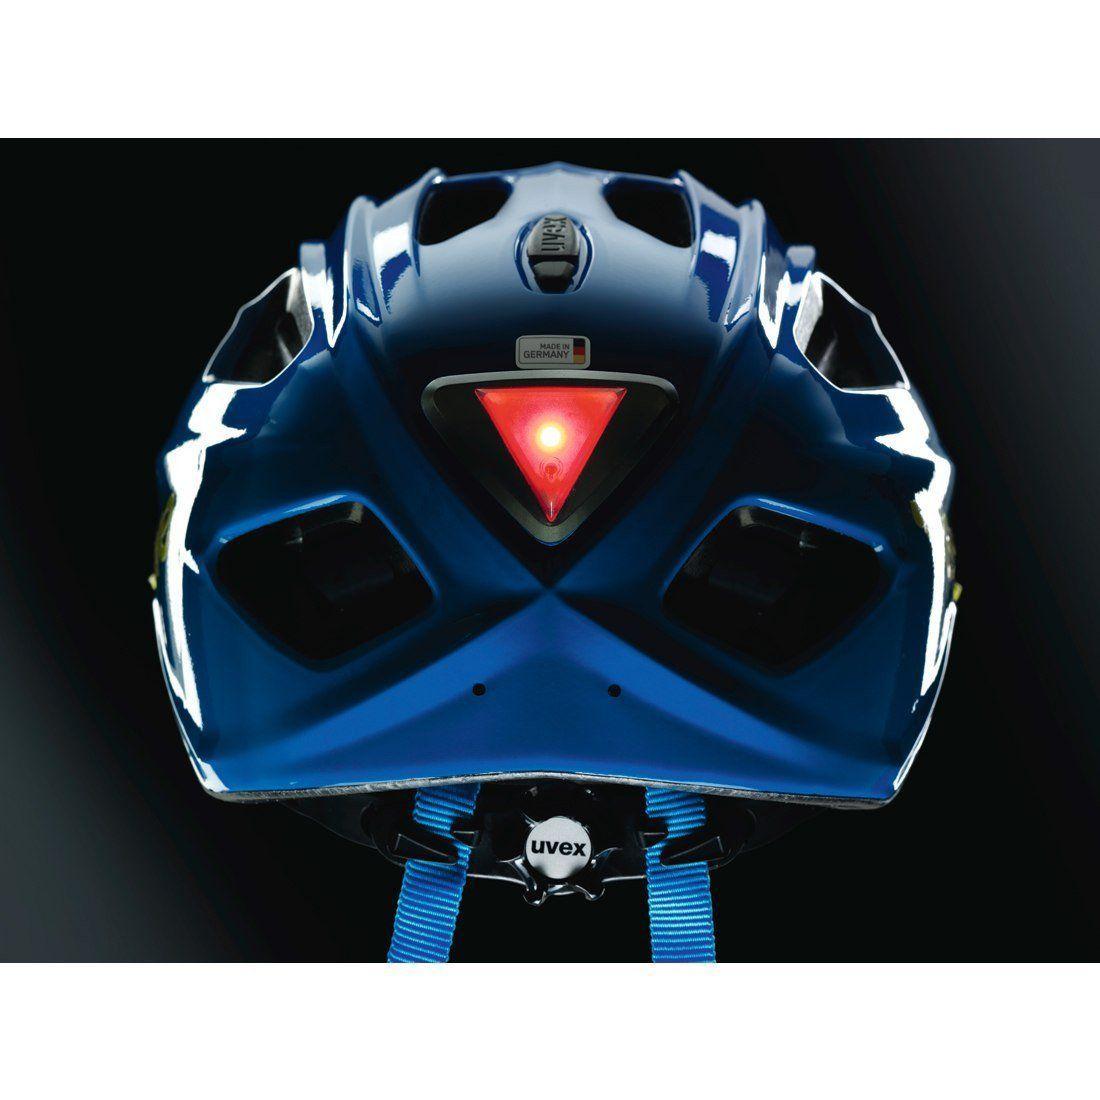 Red Triangle Sports Logo - UVEX SPORTS RD Triangle LED Helmet Light Fit Quatro JR. Free